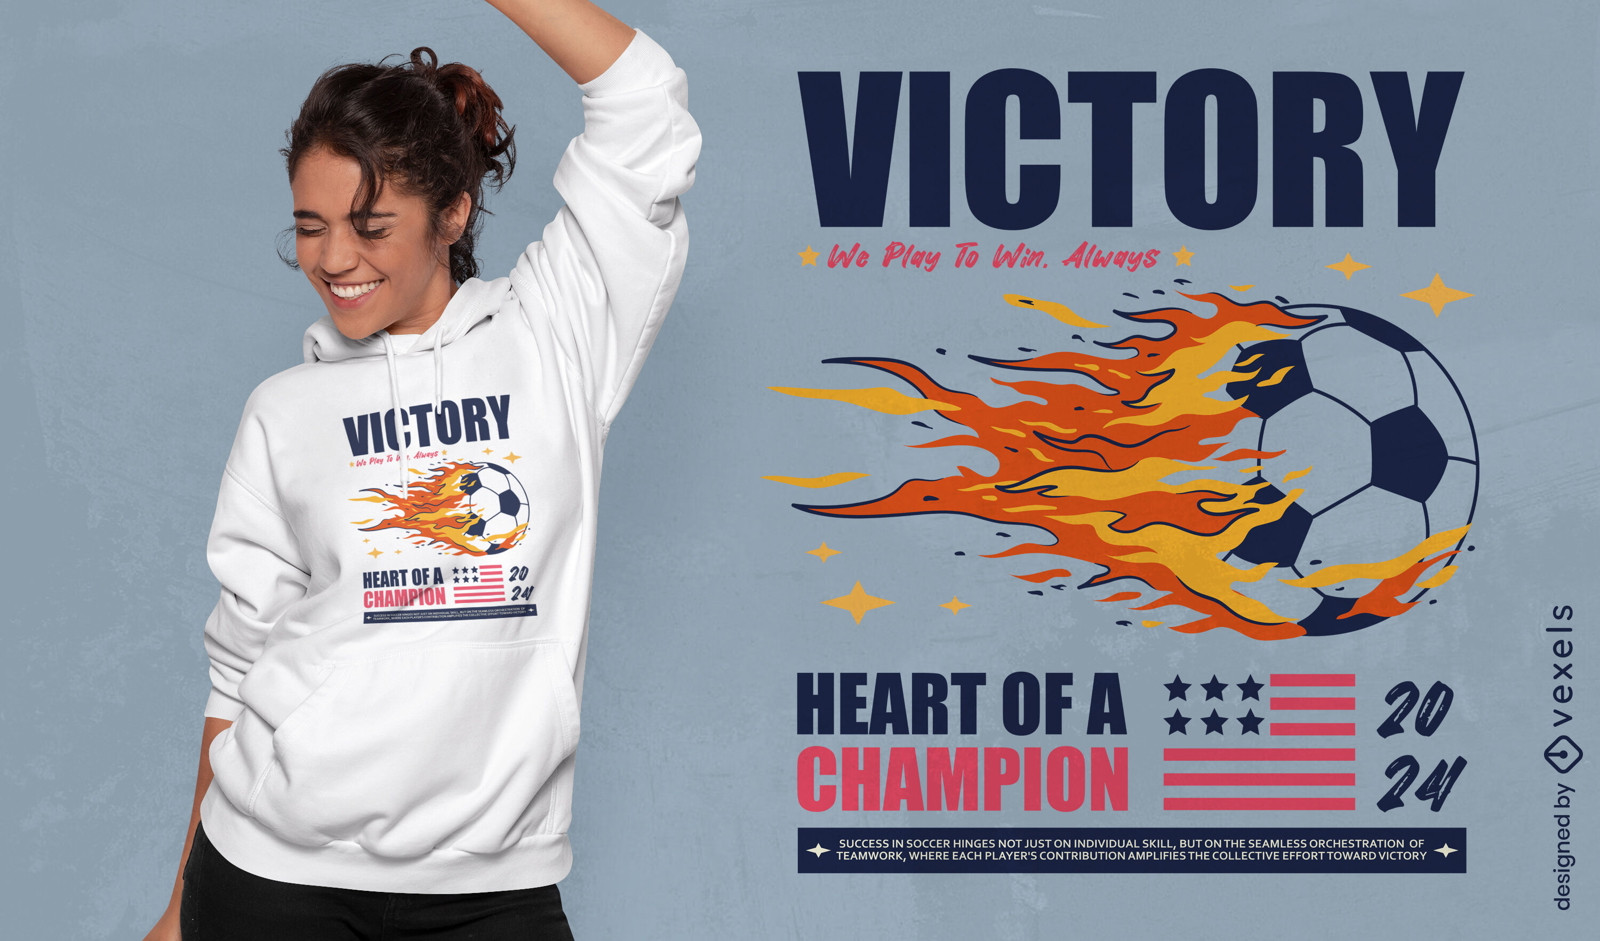 Victory soccer t-shirt design